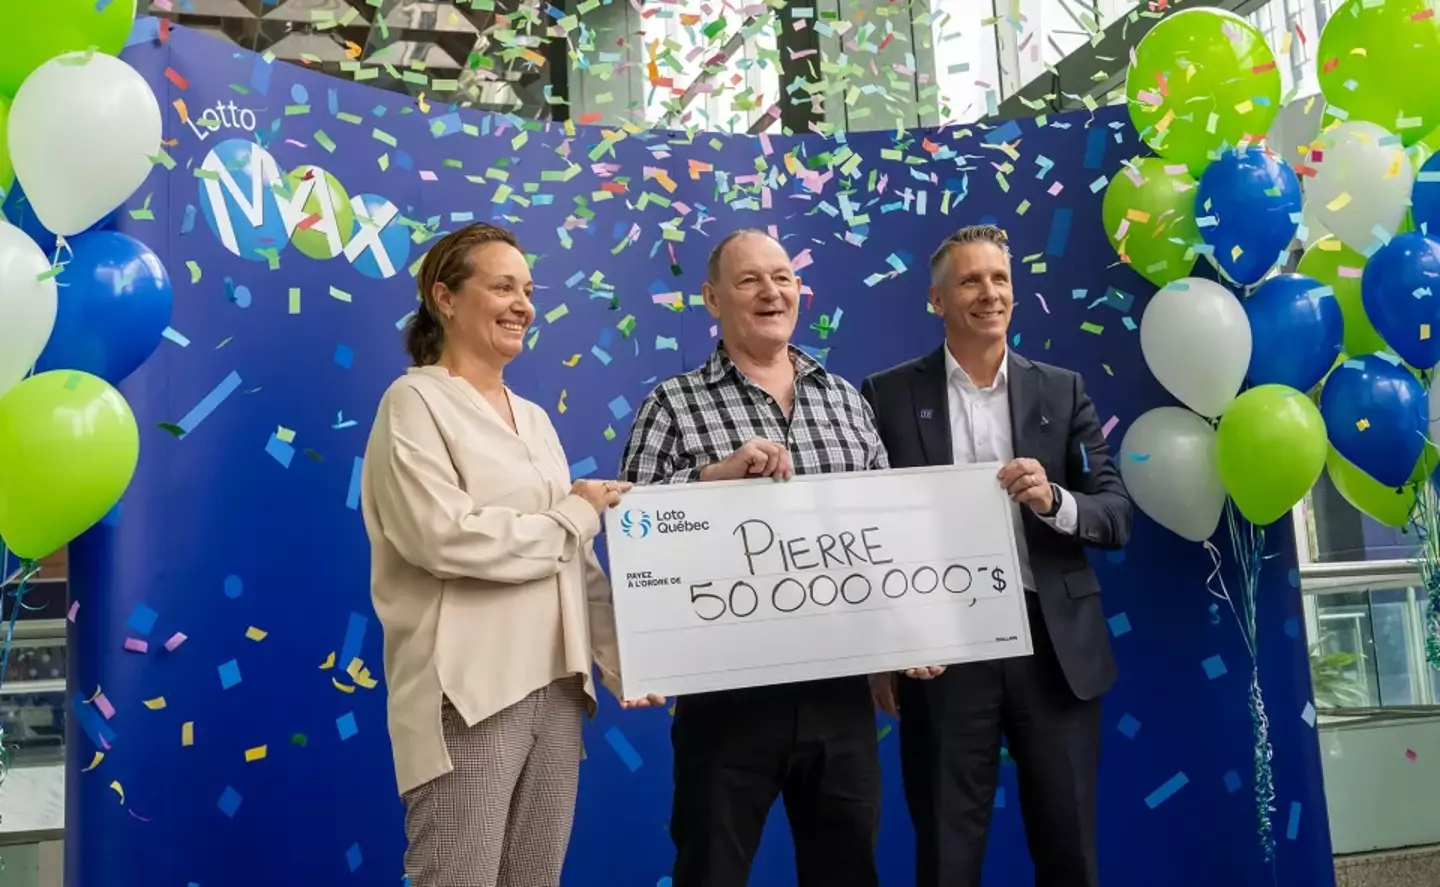 Pierre Richer won a $50 million jackpot earlier this month.